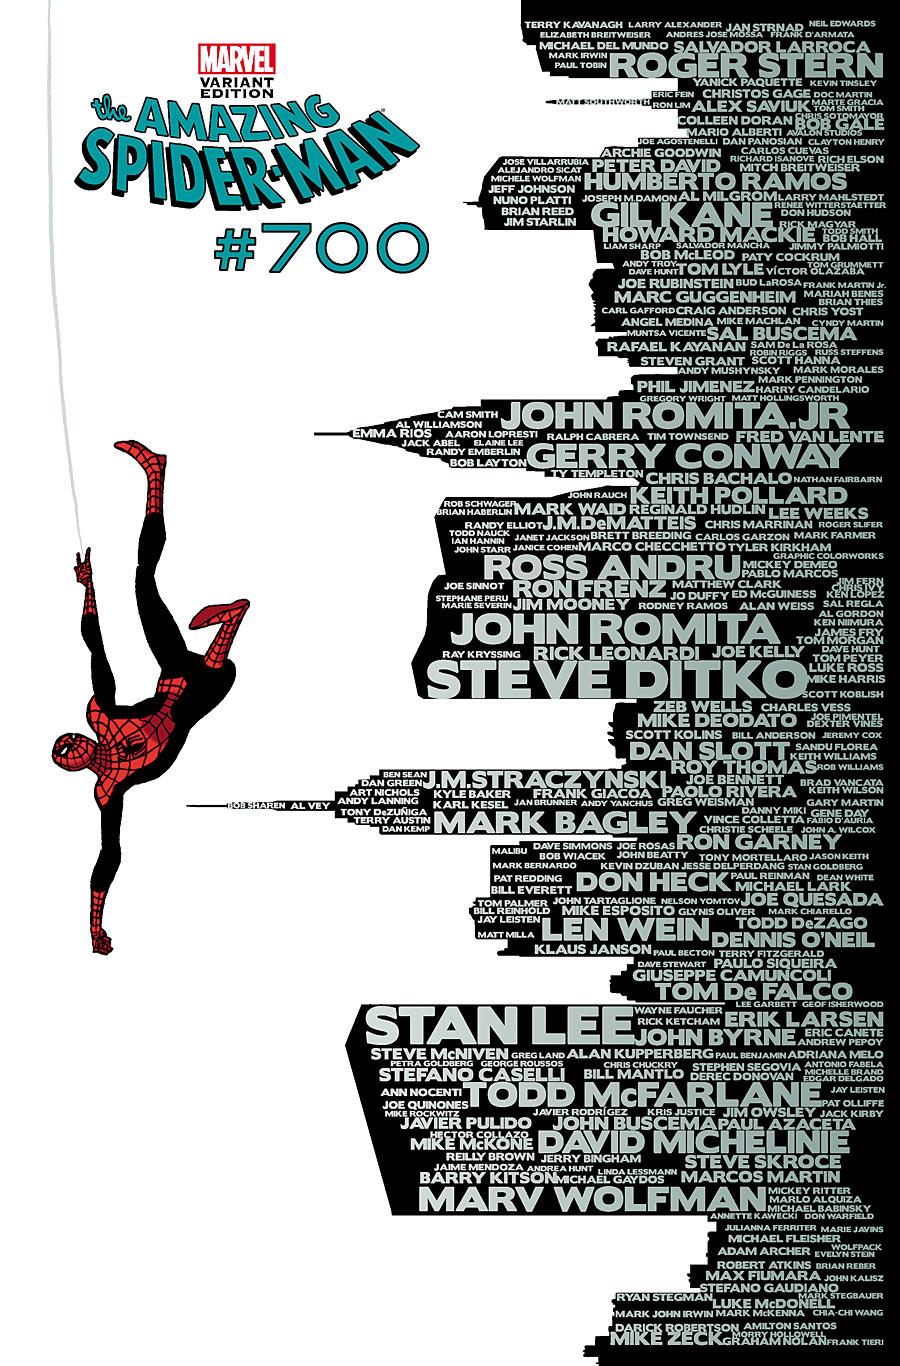 Spider-man #700 variant cover